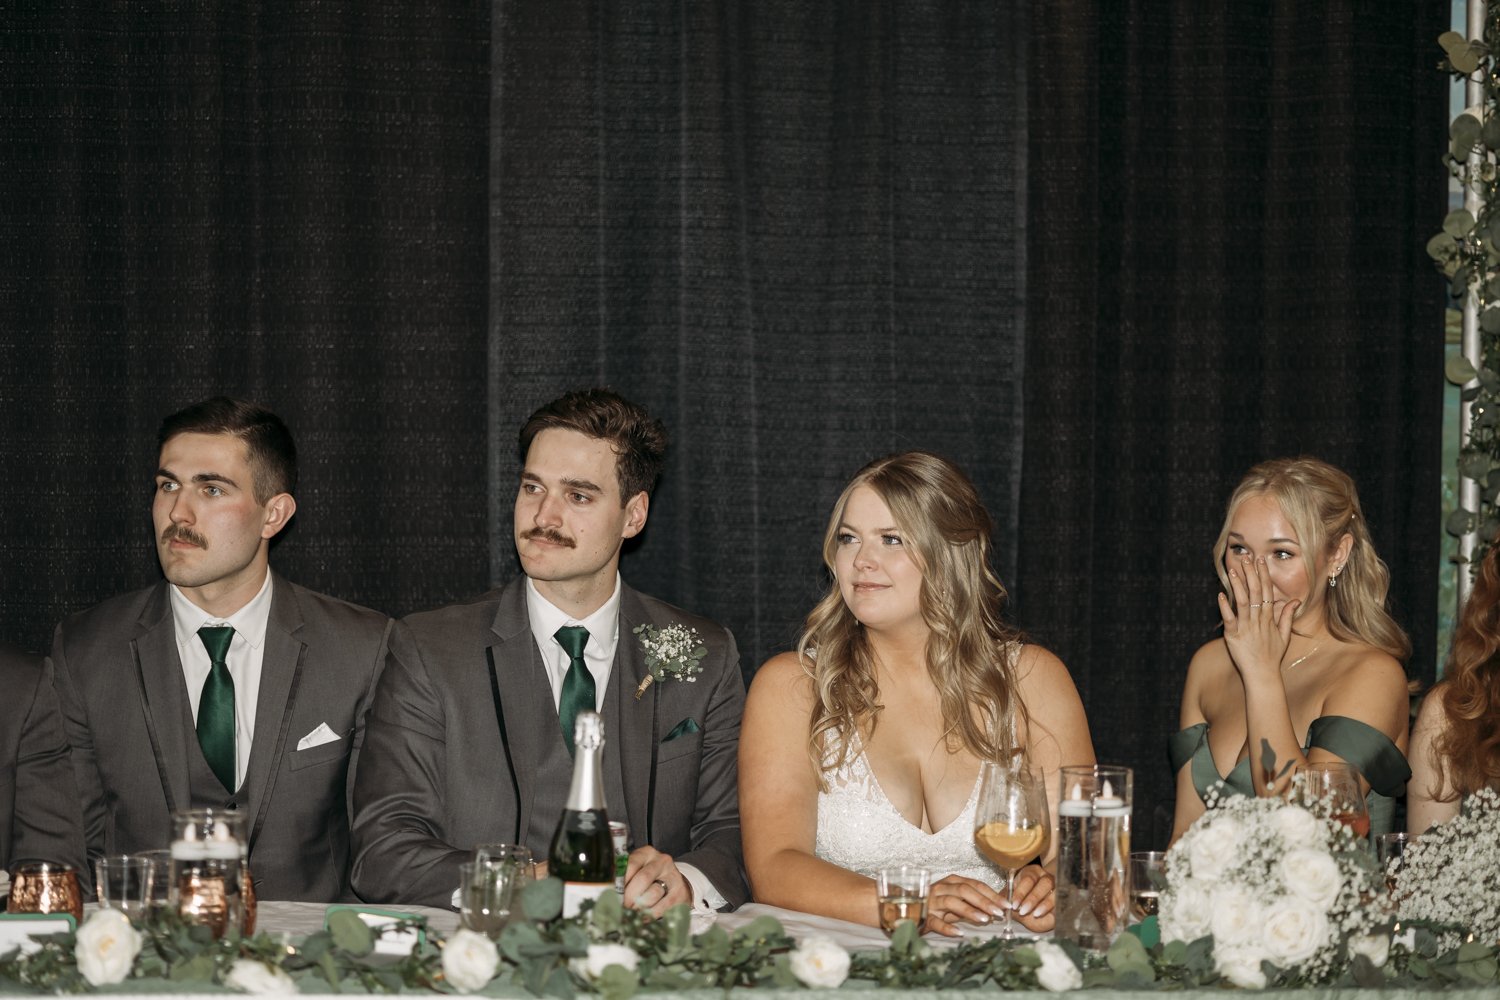 Edmonton Alberta wedding photography